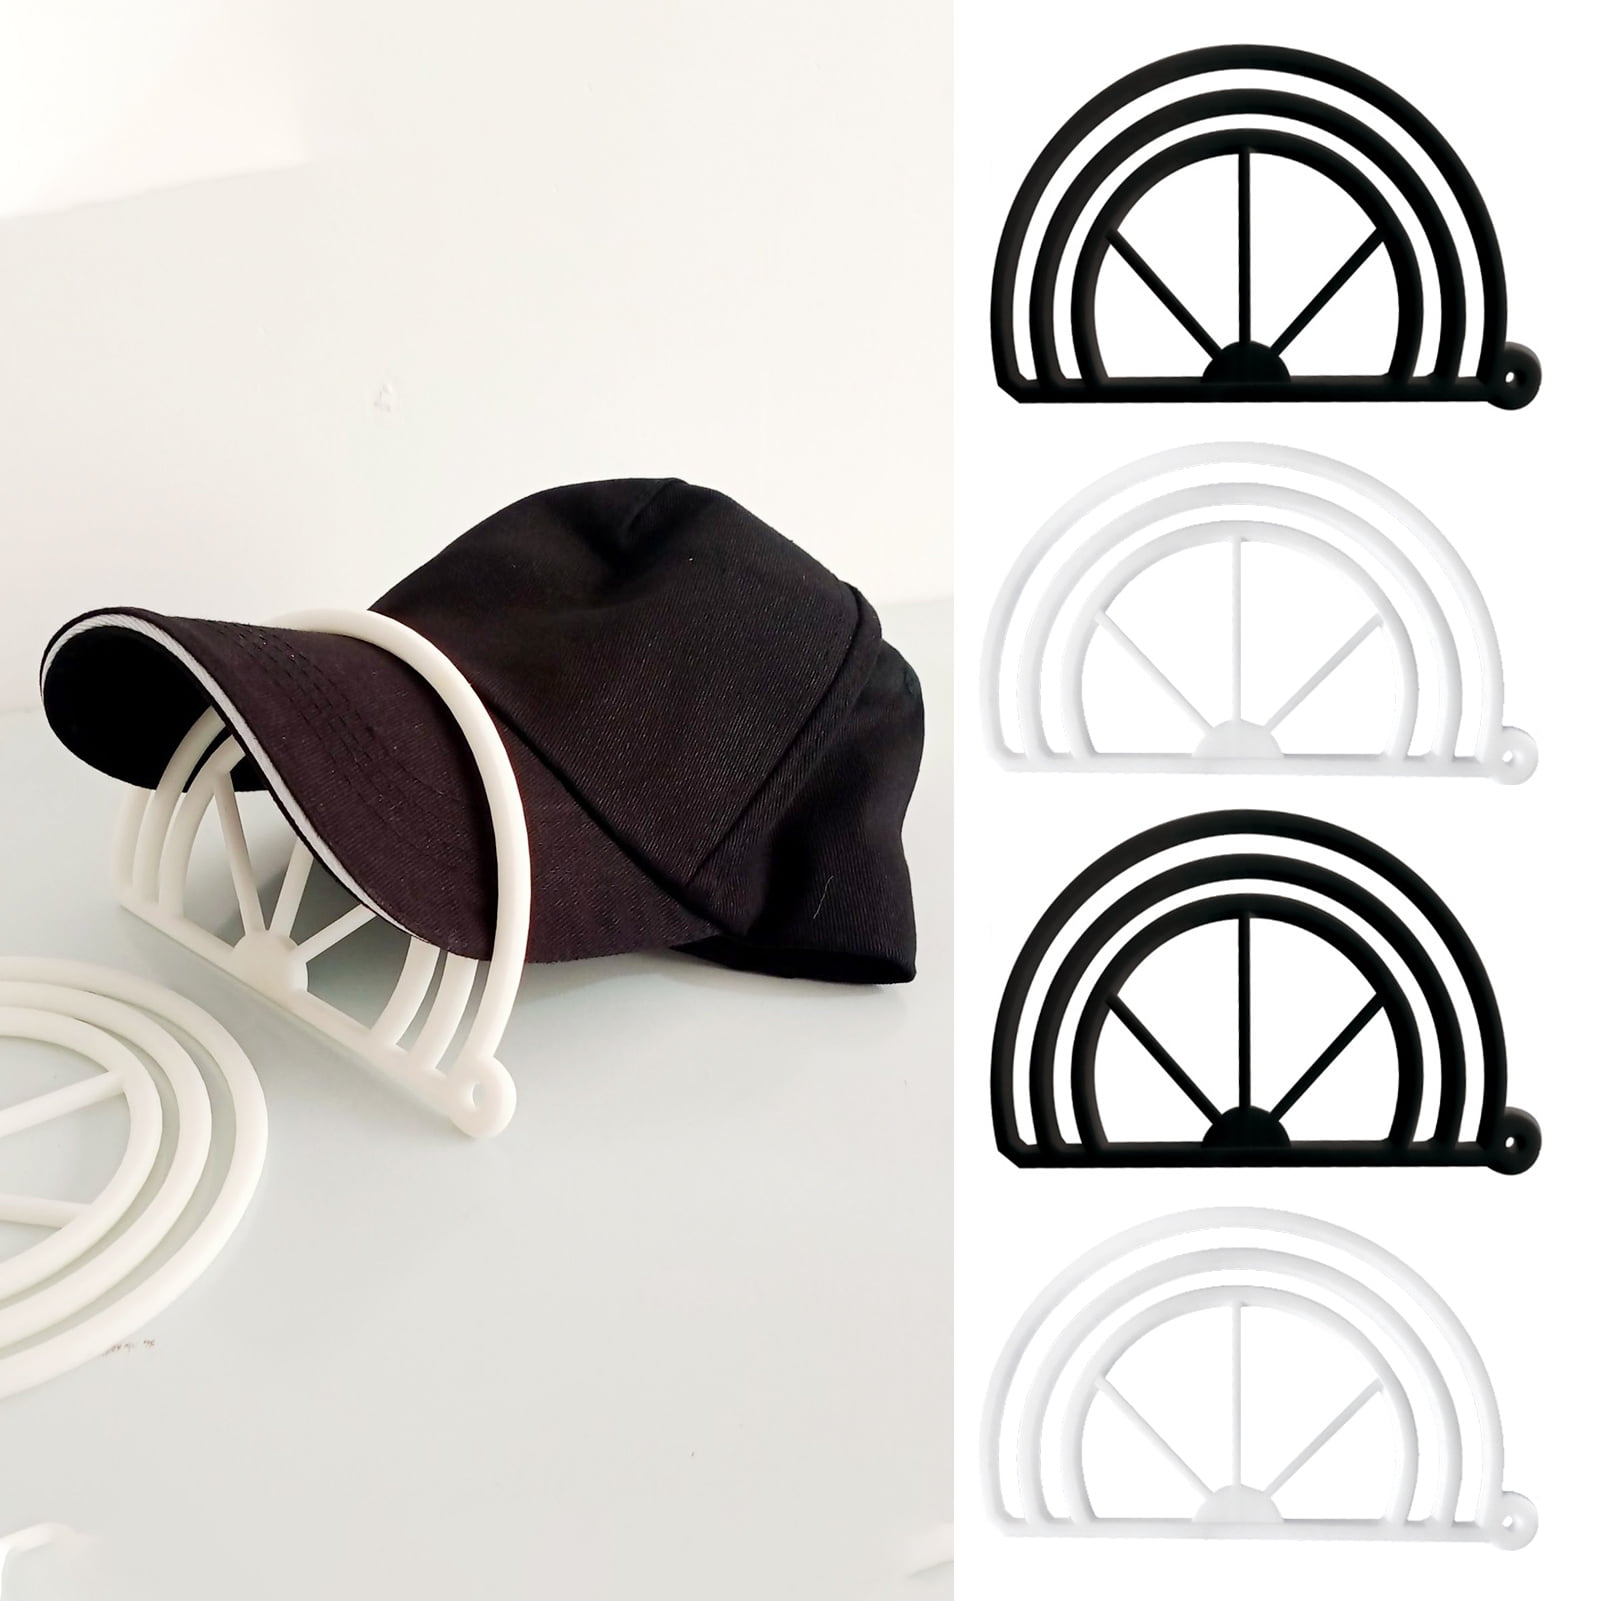 SplashNColor Modern Hat Bill Bender Curve Shaper | Hat Brim Bender | Hat Curving Band | Durable, Elegant and Easy to Use | No Steaming Required